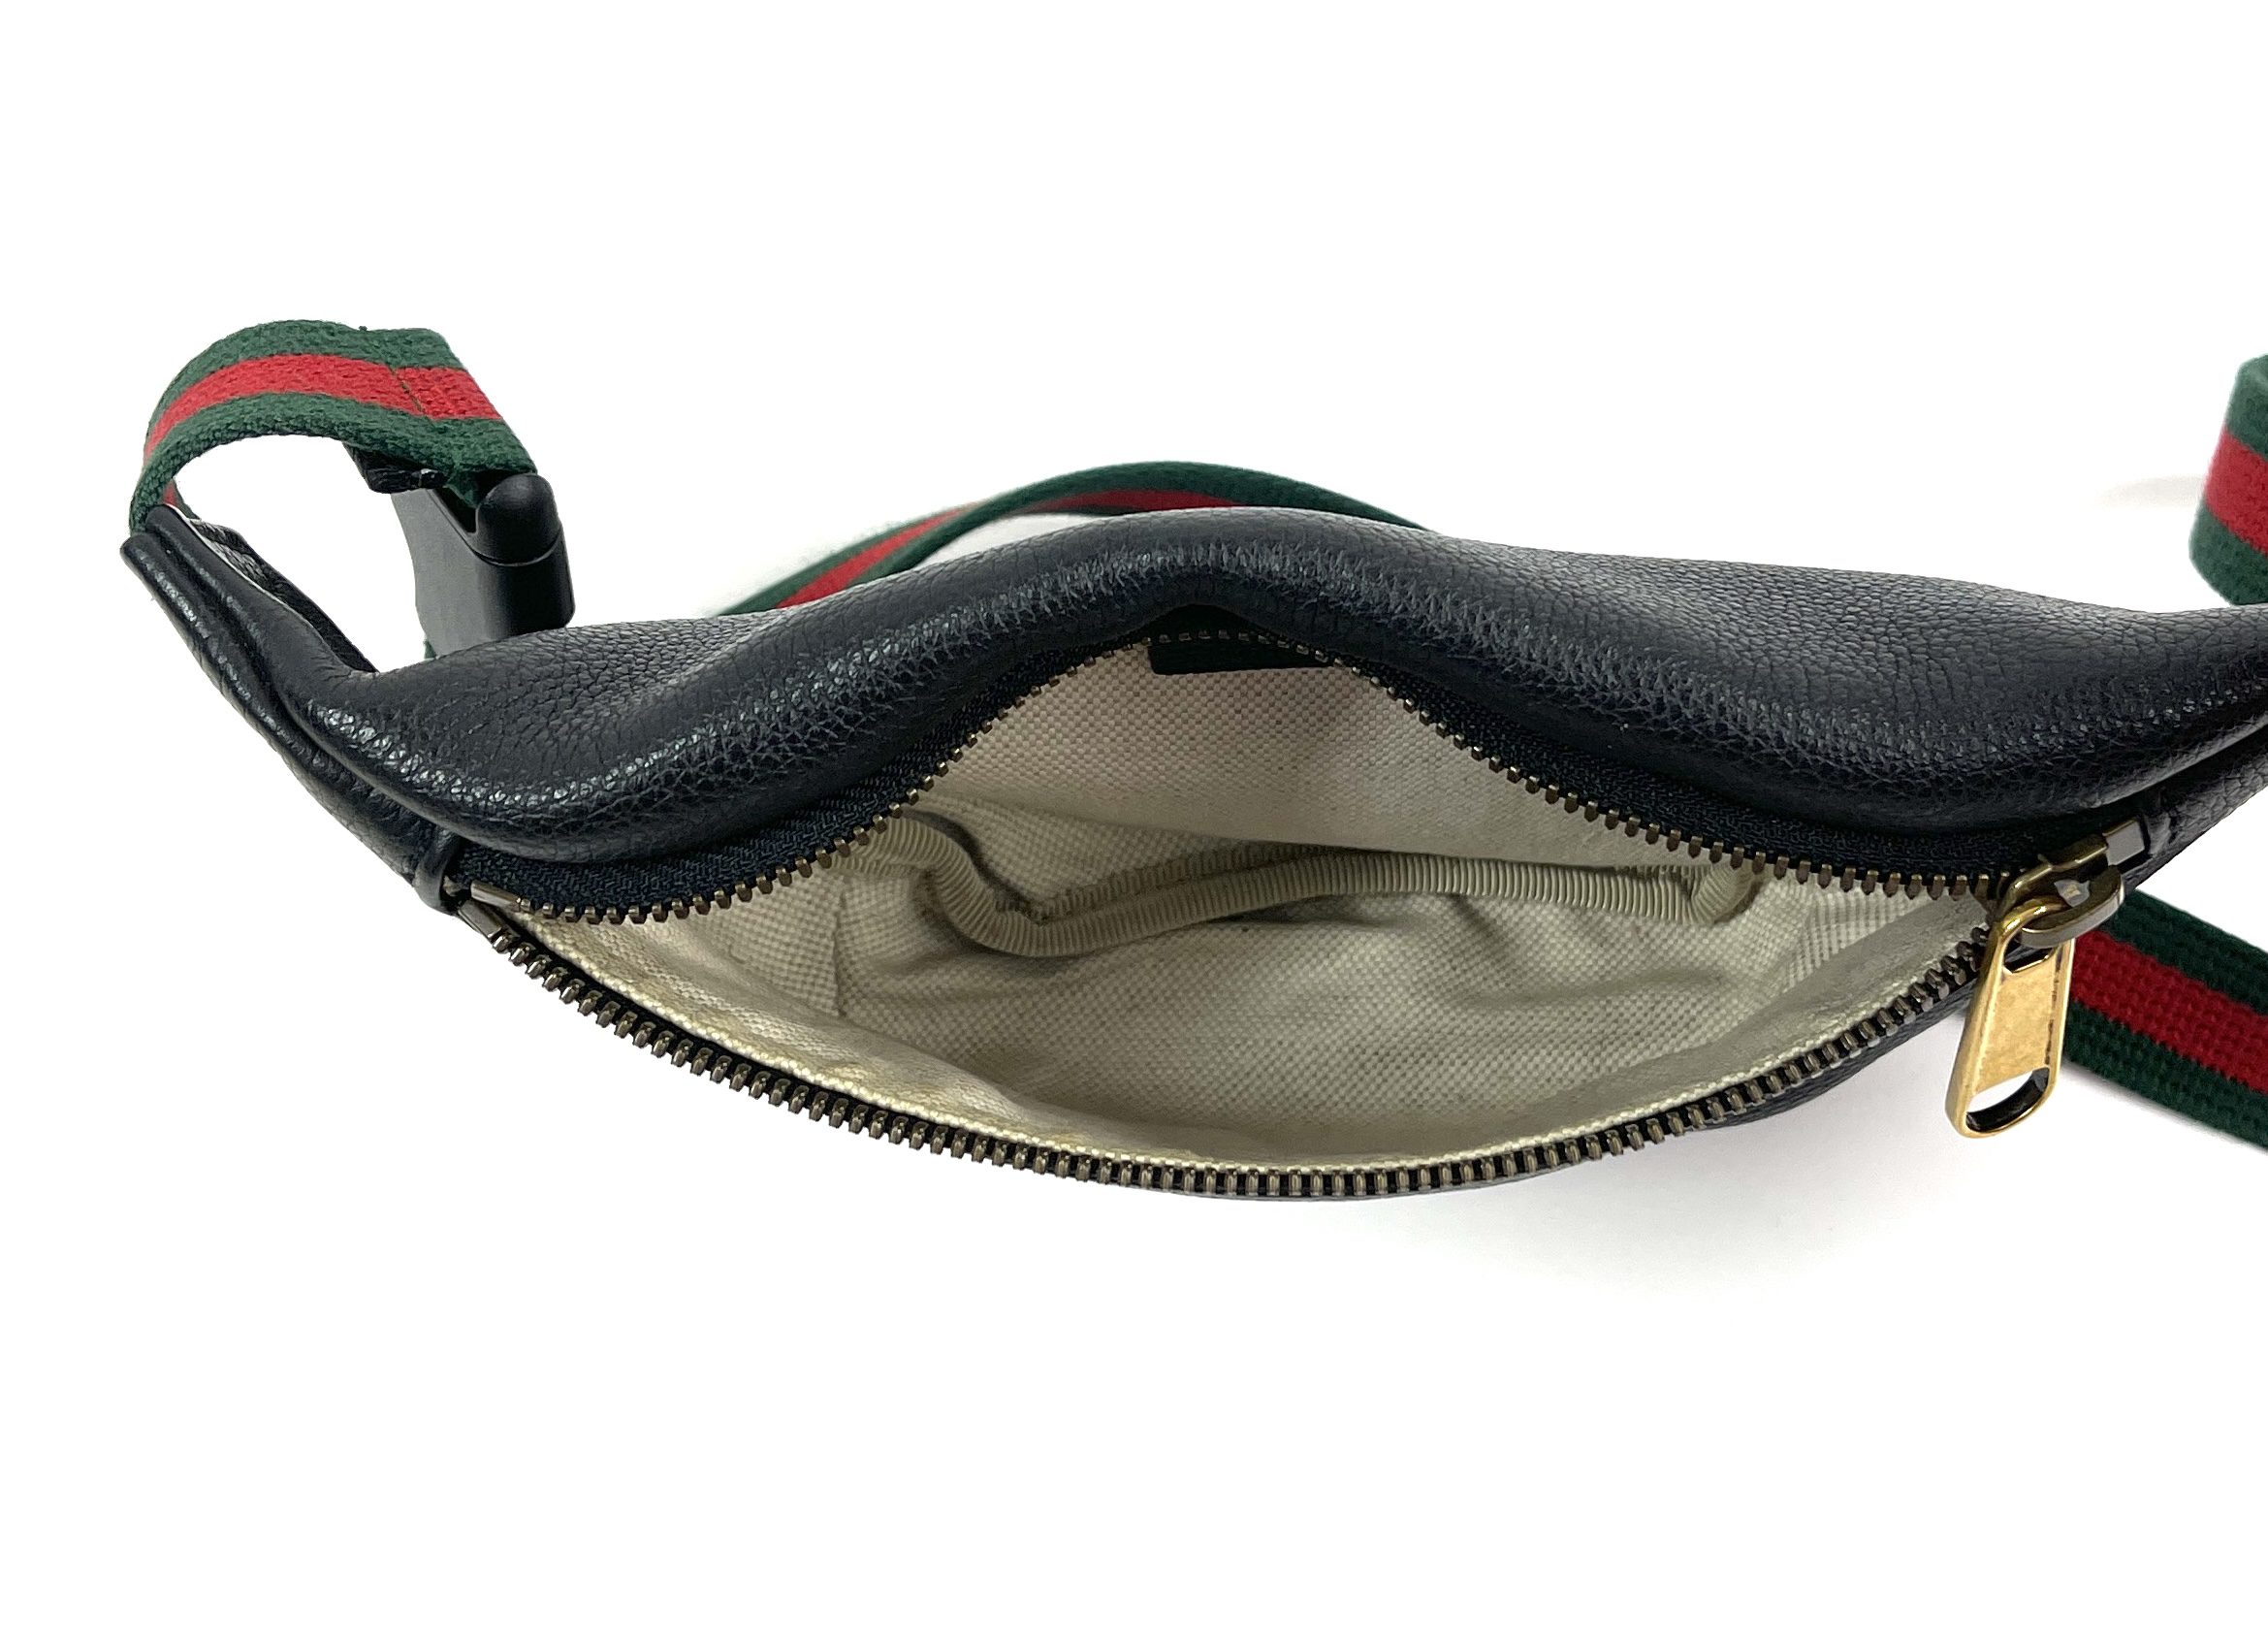 Gucci Belt Bag GG Supreme Canvas Small Beige/Black